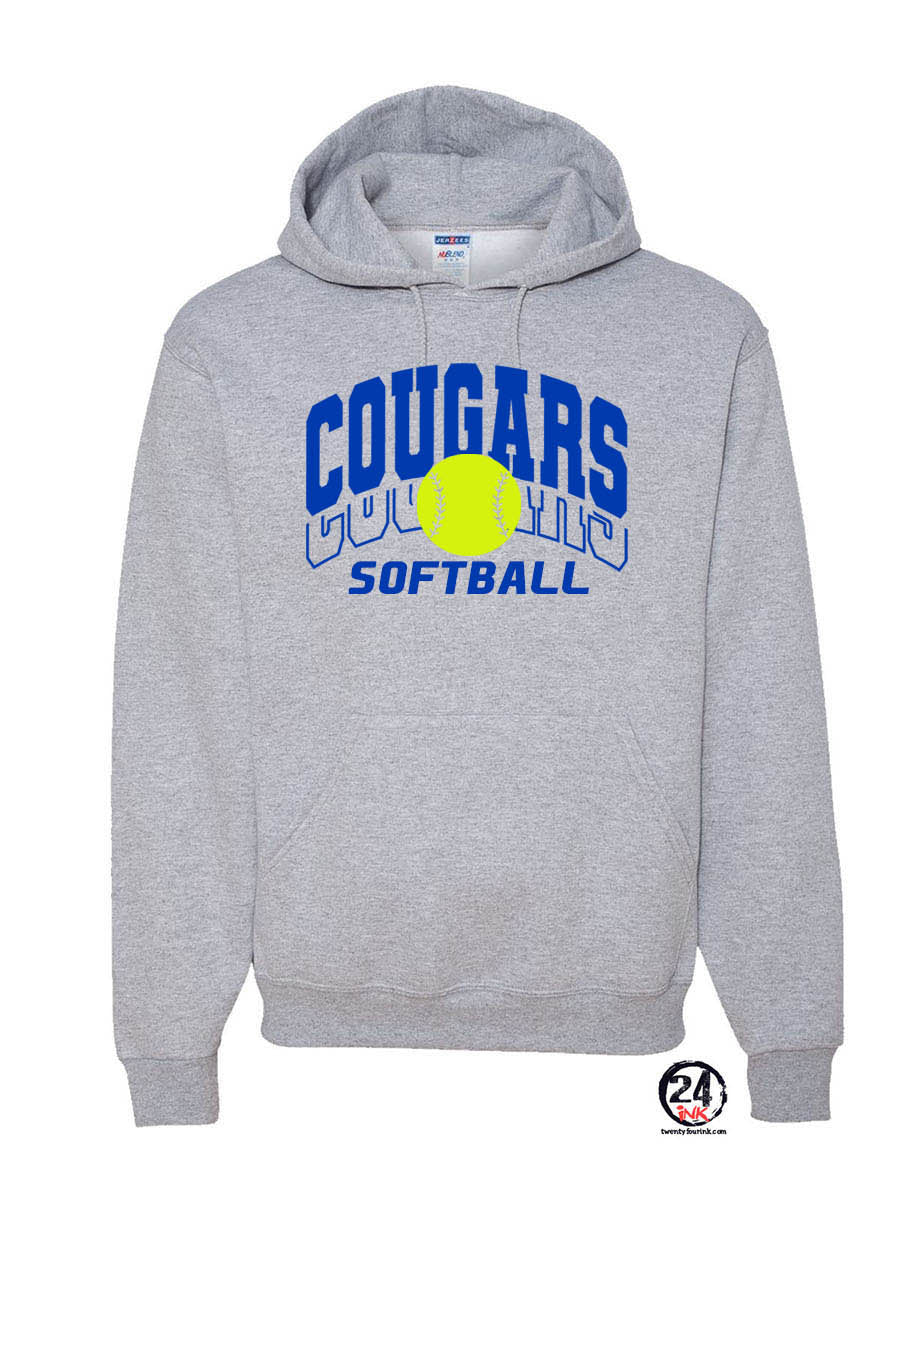 Kittatinny Softball Design 2 Hooded Sweatshirt